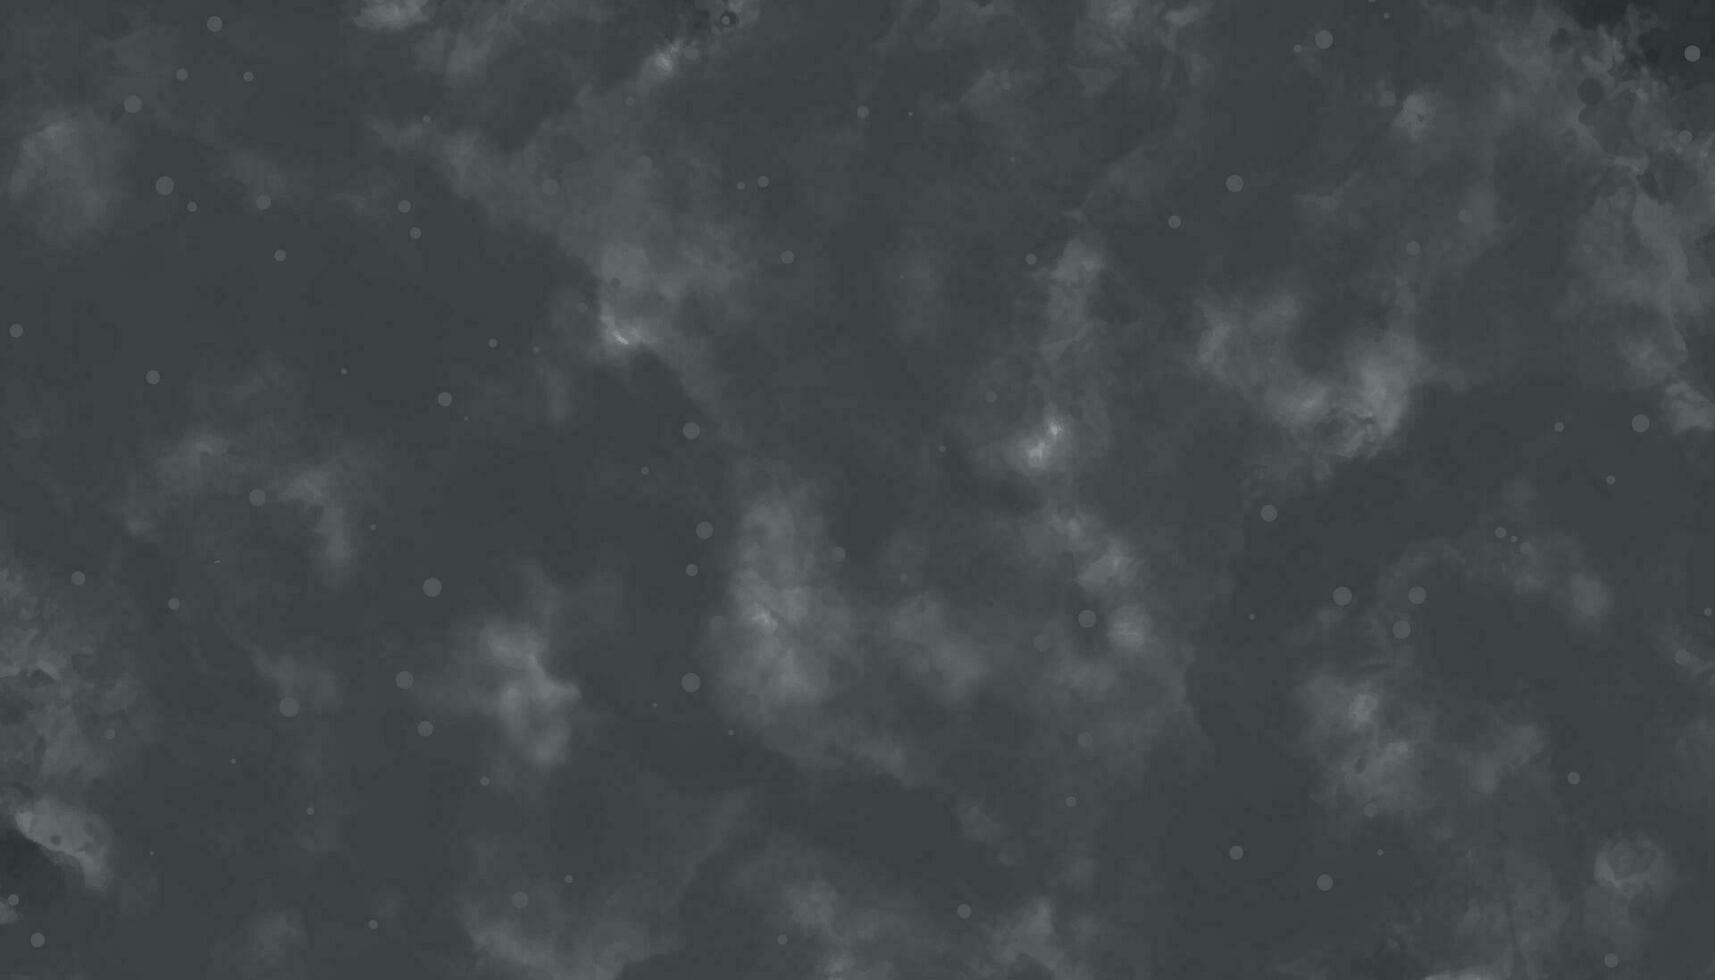 grau schwarz Grunge Textur. dunkel Aquarell Hintergrund. schwarz Aquarell. schwarz Mauer Textur. schwarz und Weiß Aquarell Hintergrund vektor